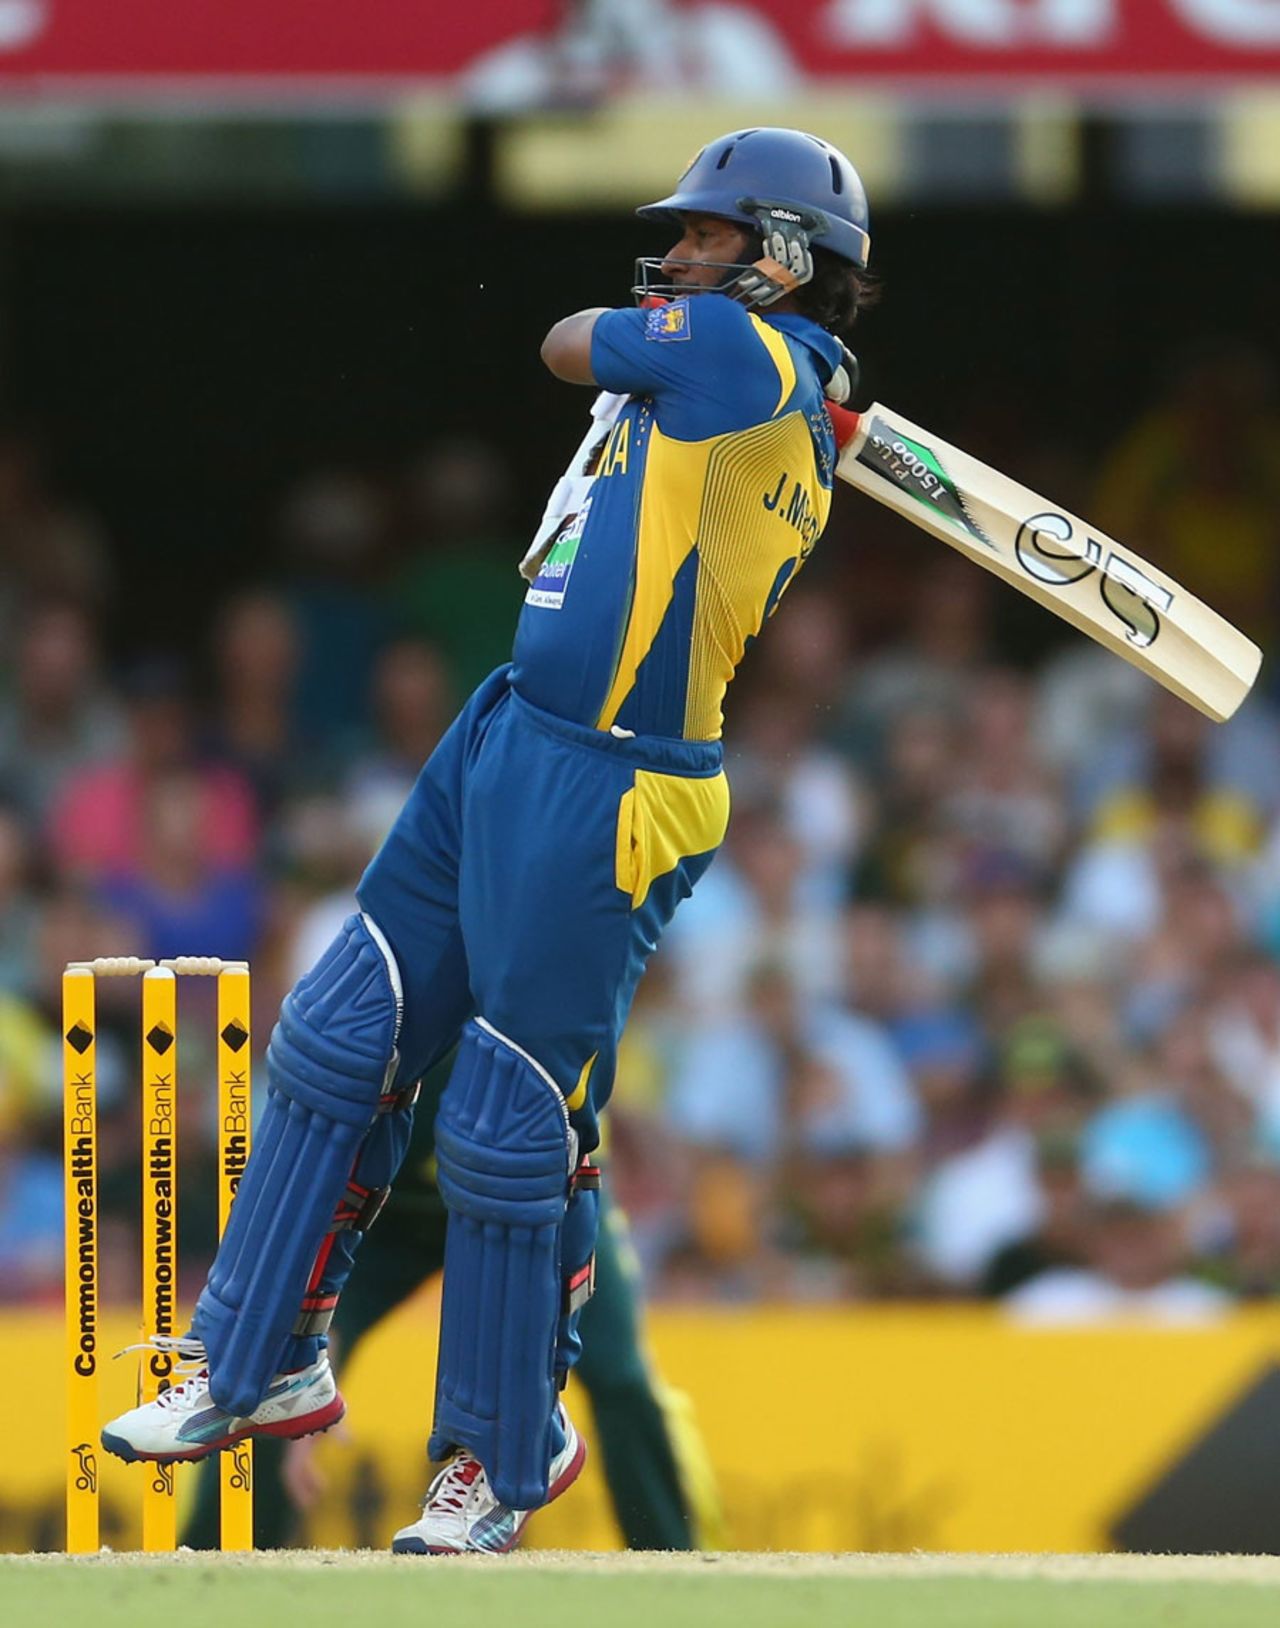 Jeevan Mendis fell to a poorly executed pull shot, Australia v Sri Lanka, 3rd ODI, Brisbane, January 18, 2013